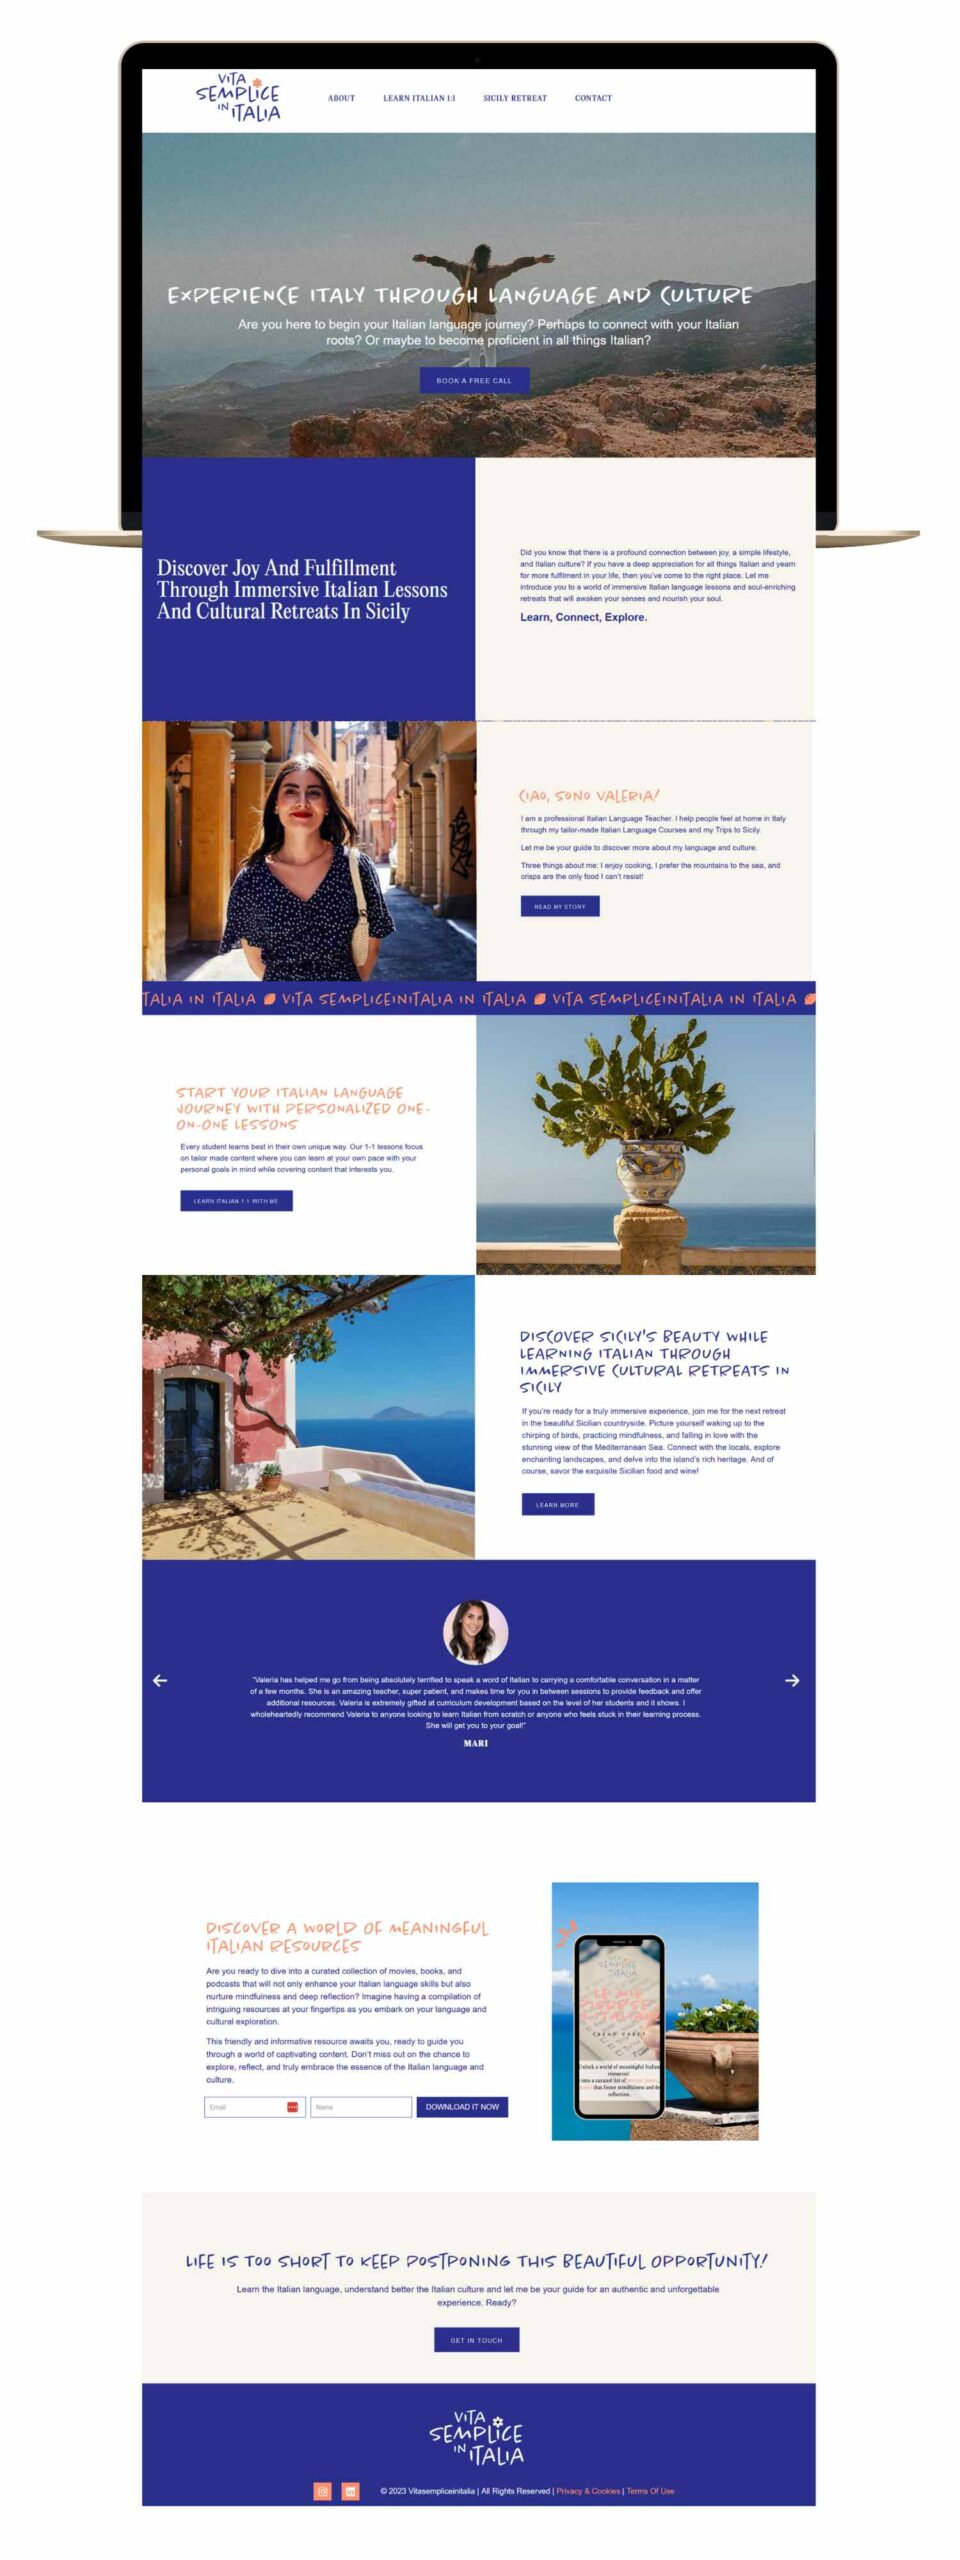 Portfolio - Website Design - Vita Simplice in Italia - Alina Krasnozhon